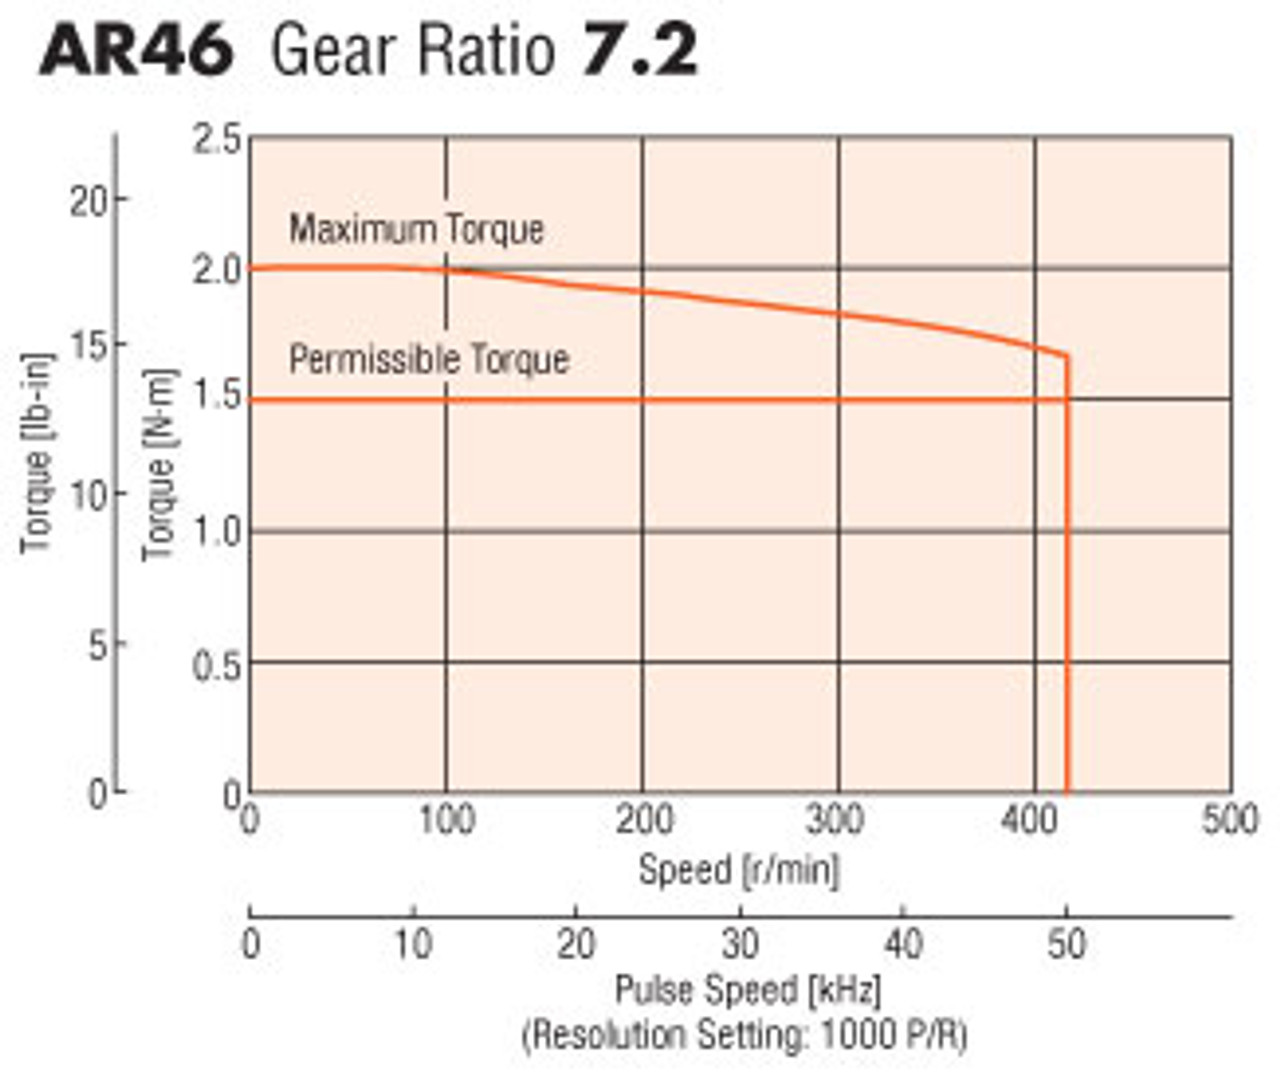 ARM46MC-PS7 - Speed-Torque